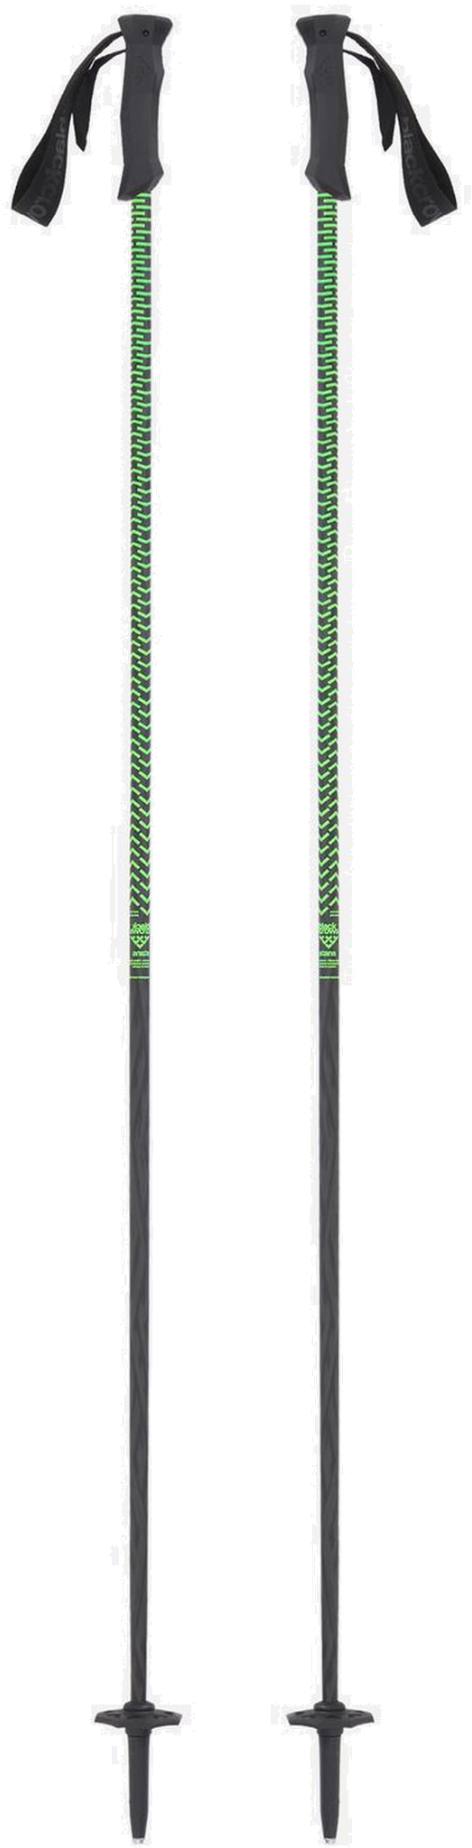 Stans 22/23 Poles Black / Green 115